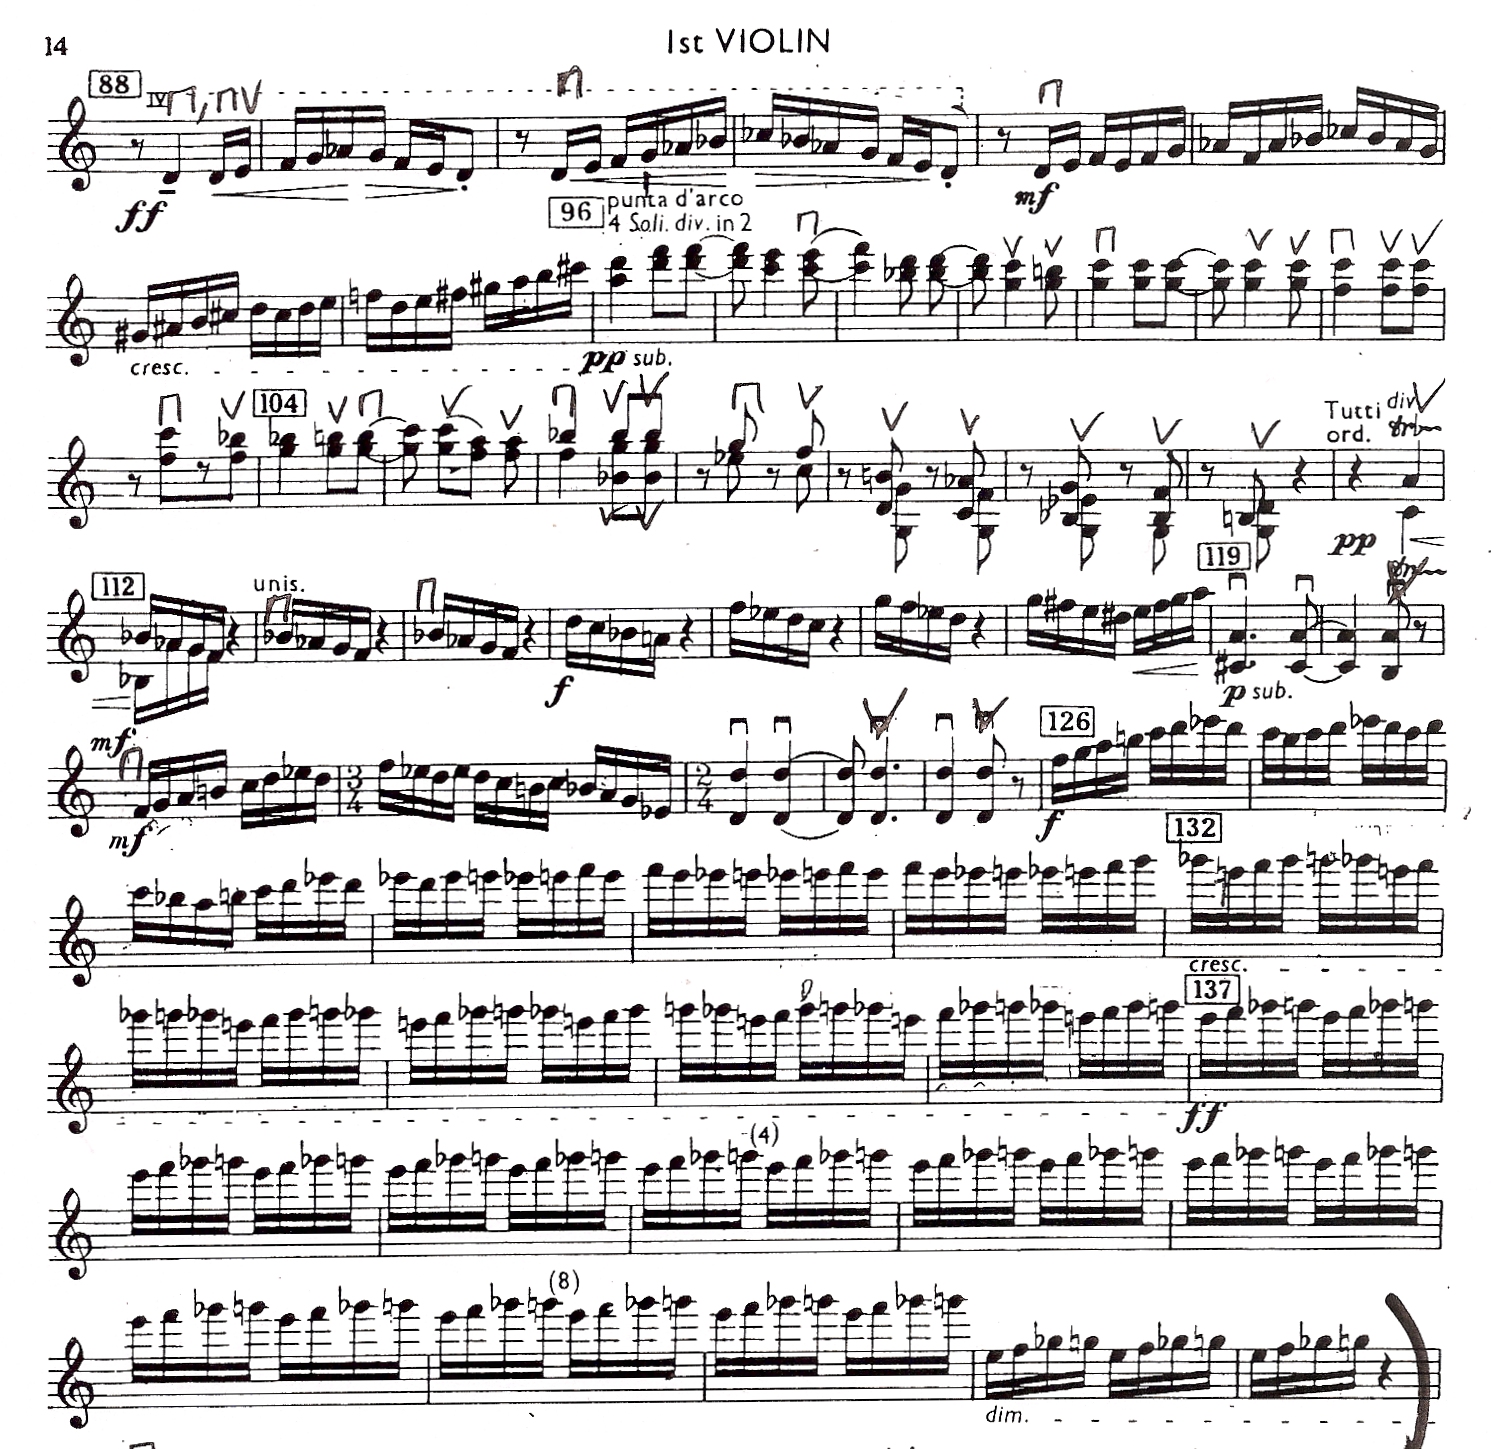 Bartok: Concerto for Orchestra, mvt V (mm. 88- 144)-Violin Excerpt